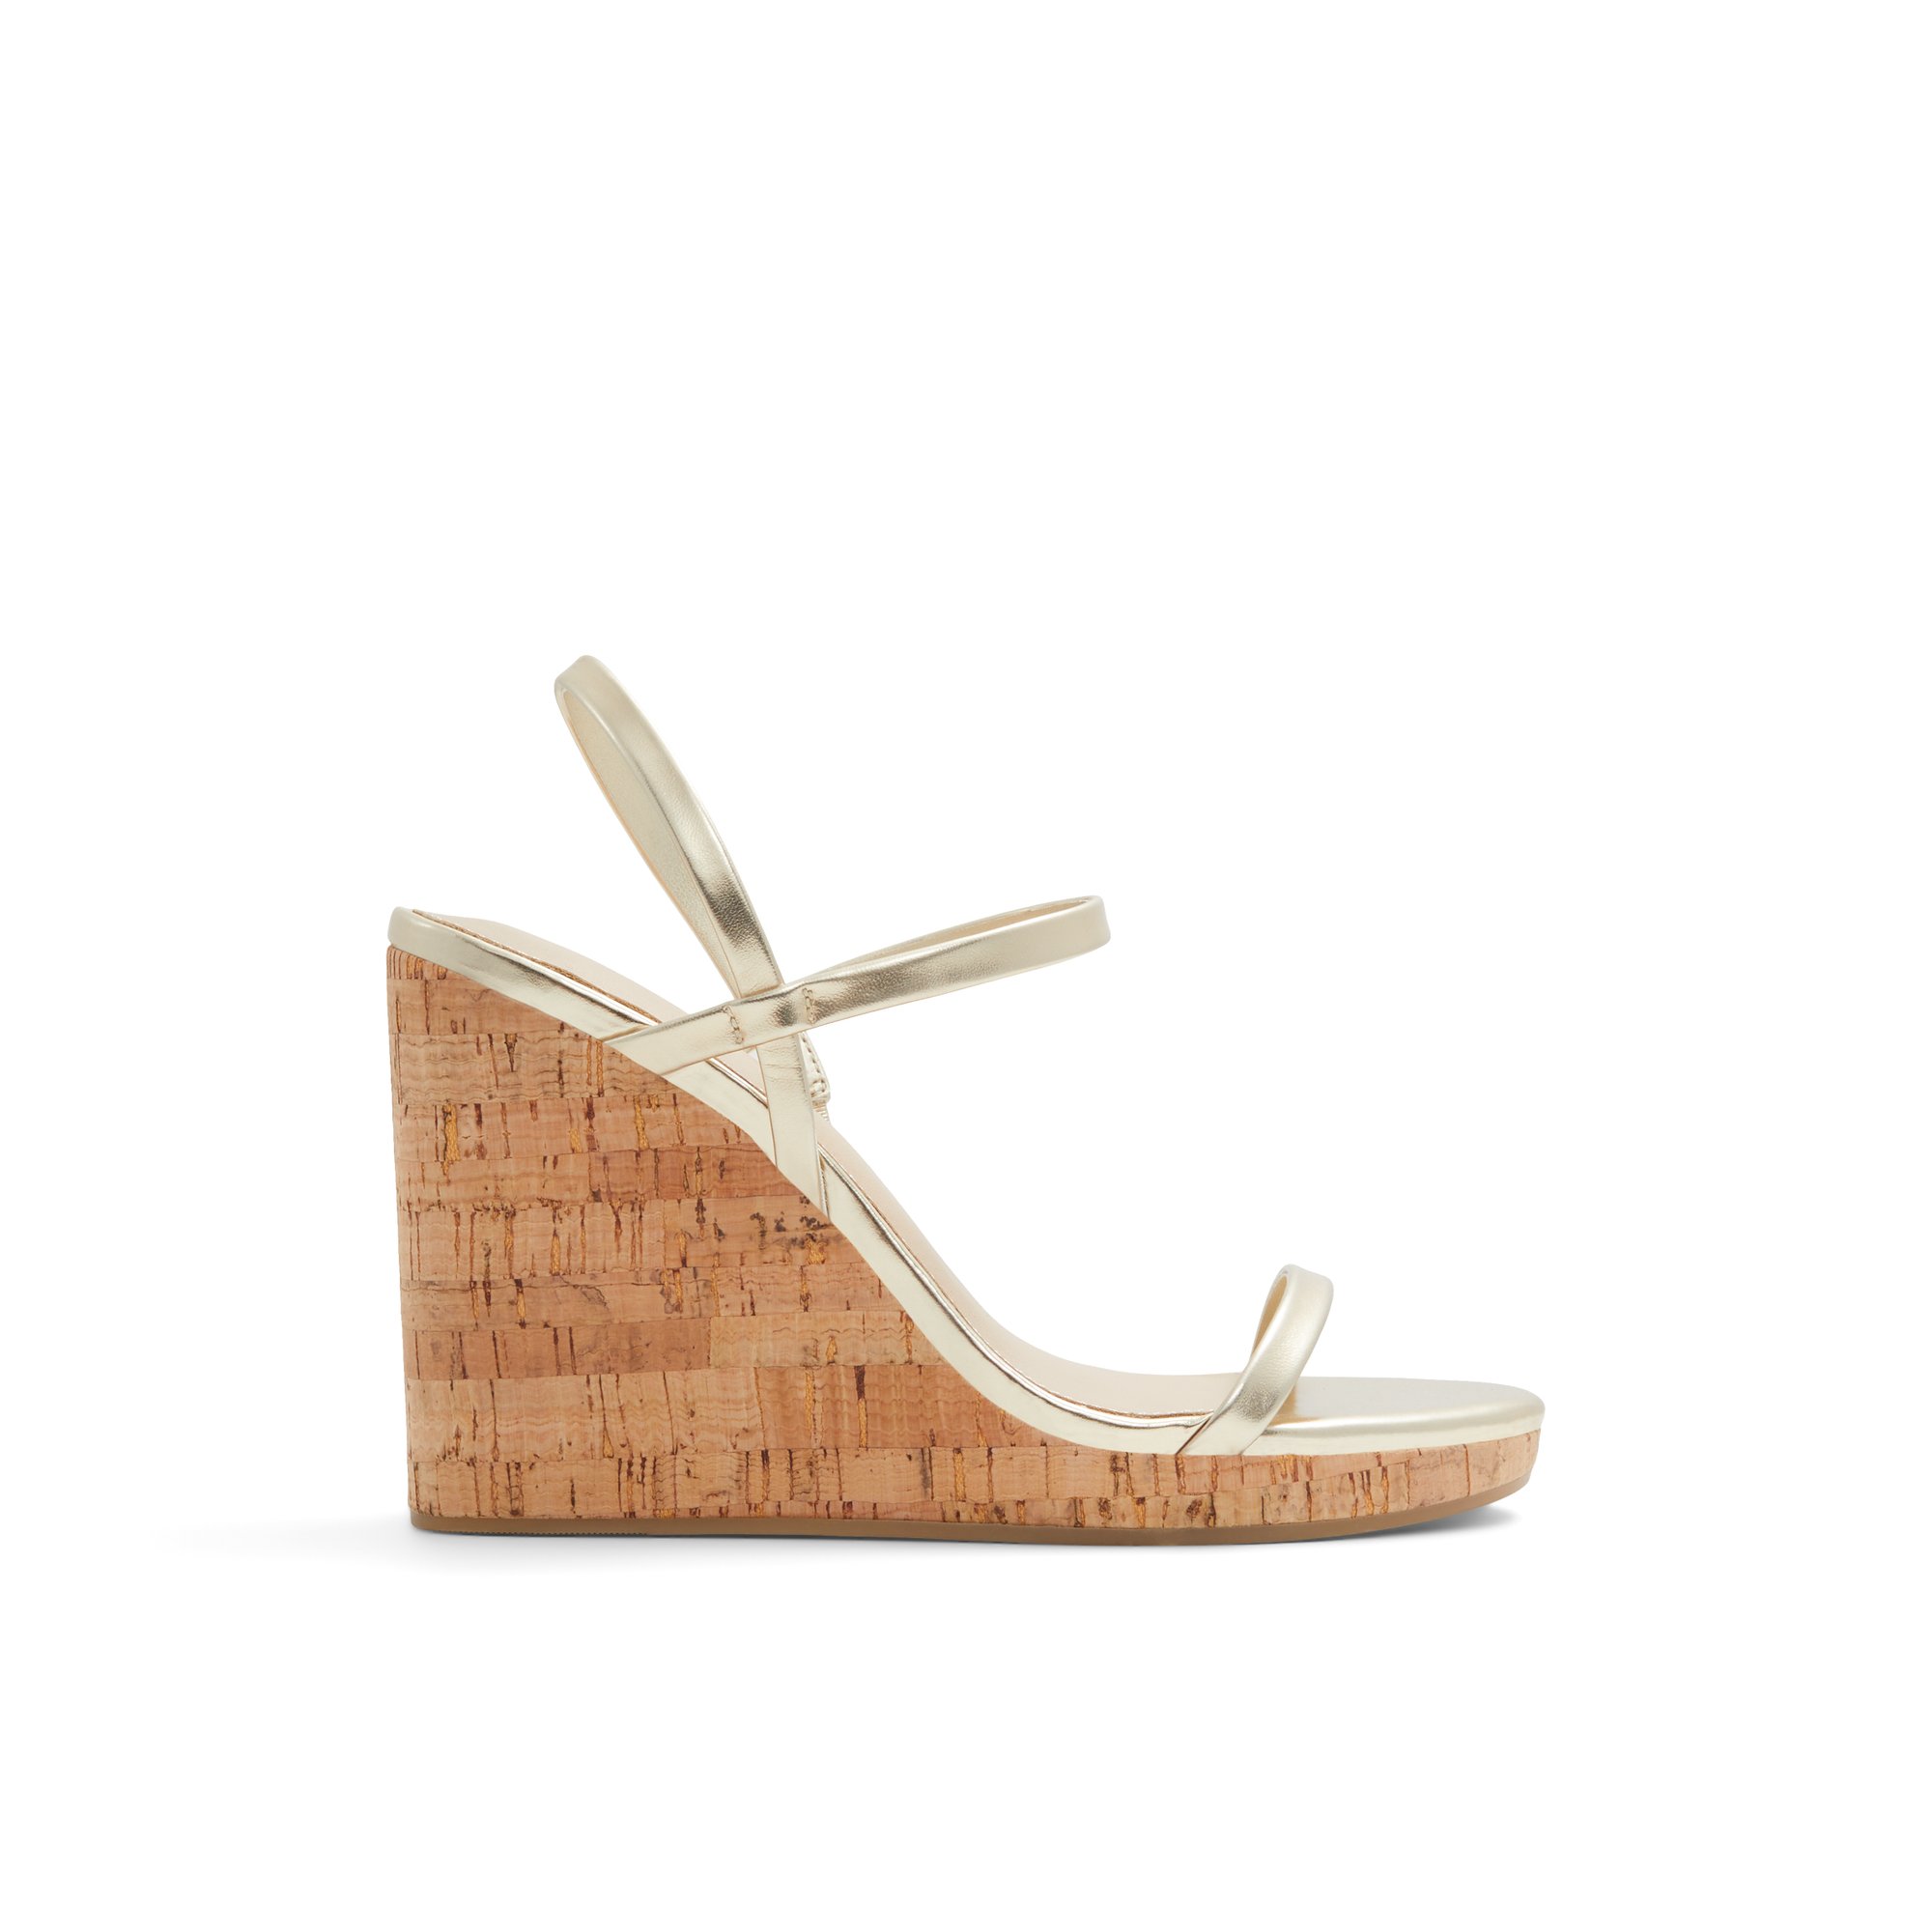 ALDO Mirabella - Women's Sandals Wedges - Gold